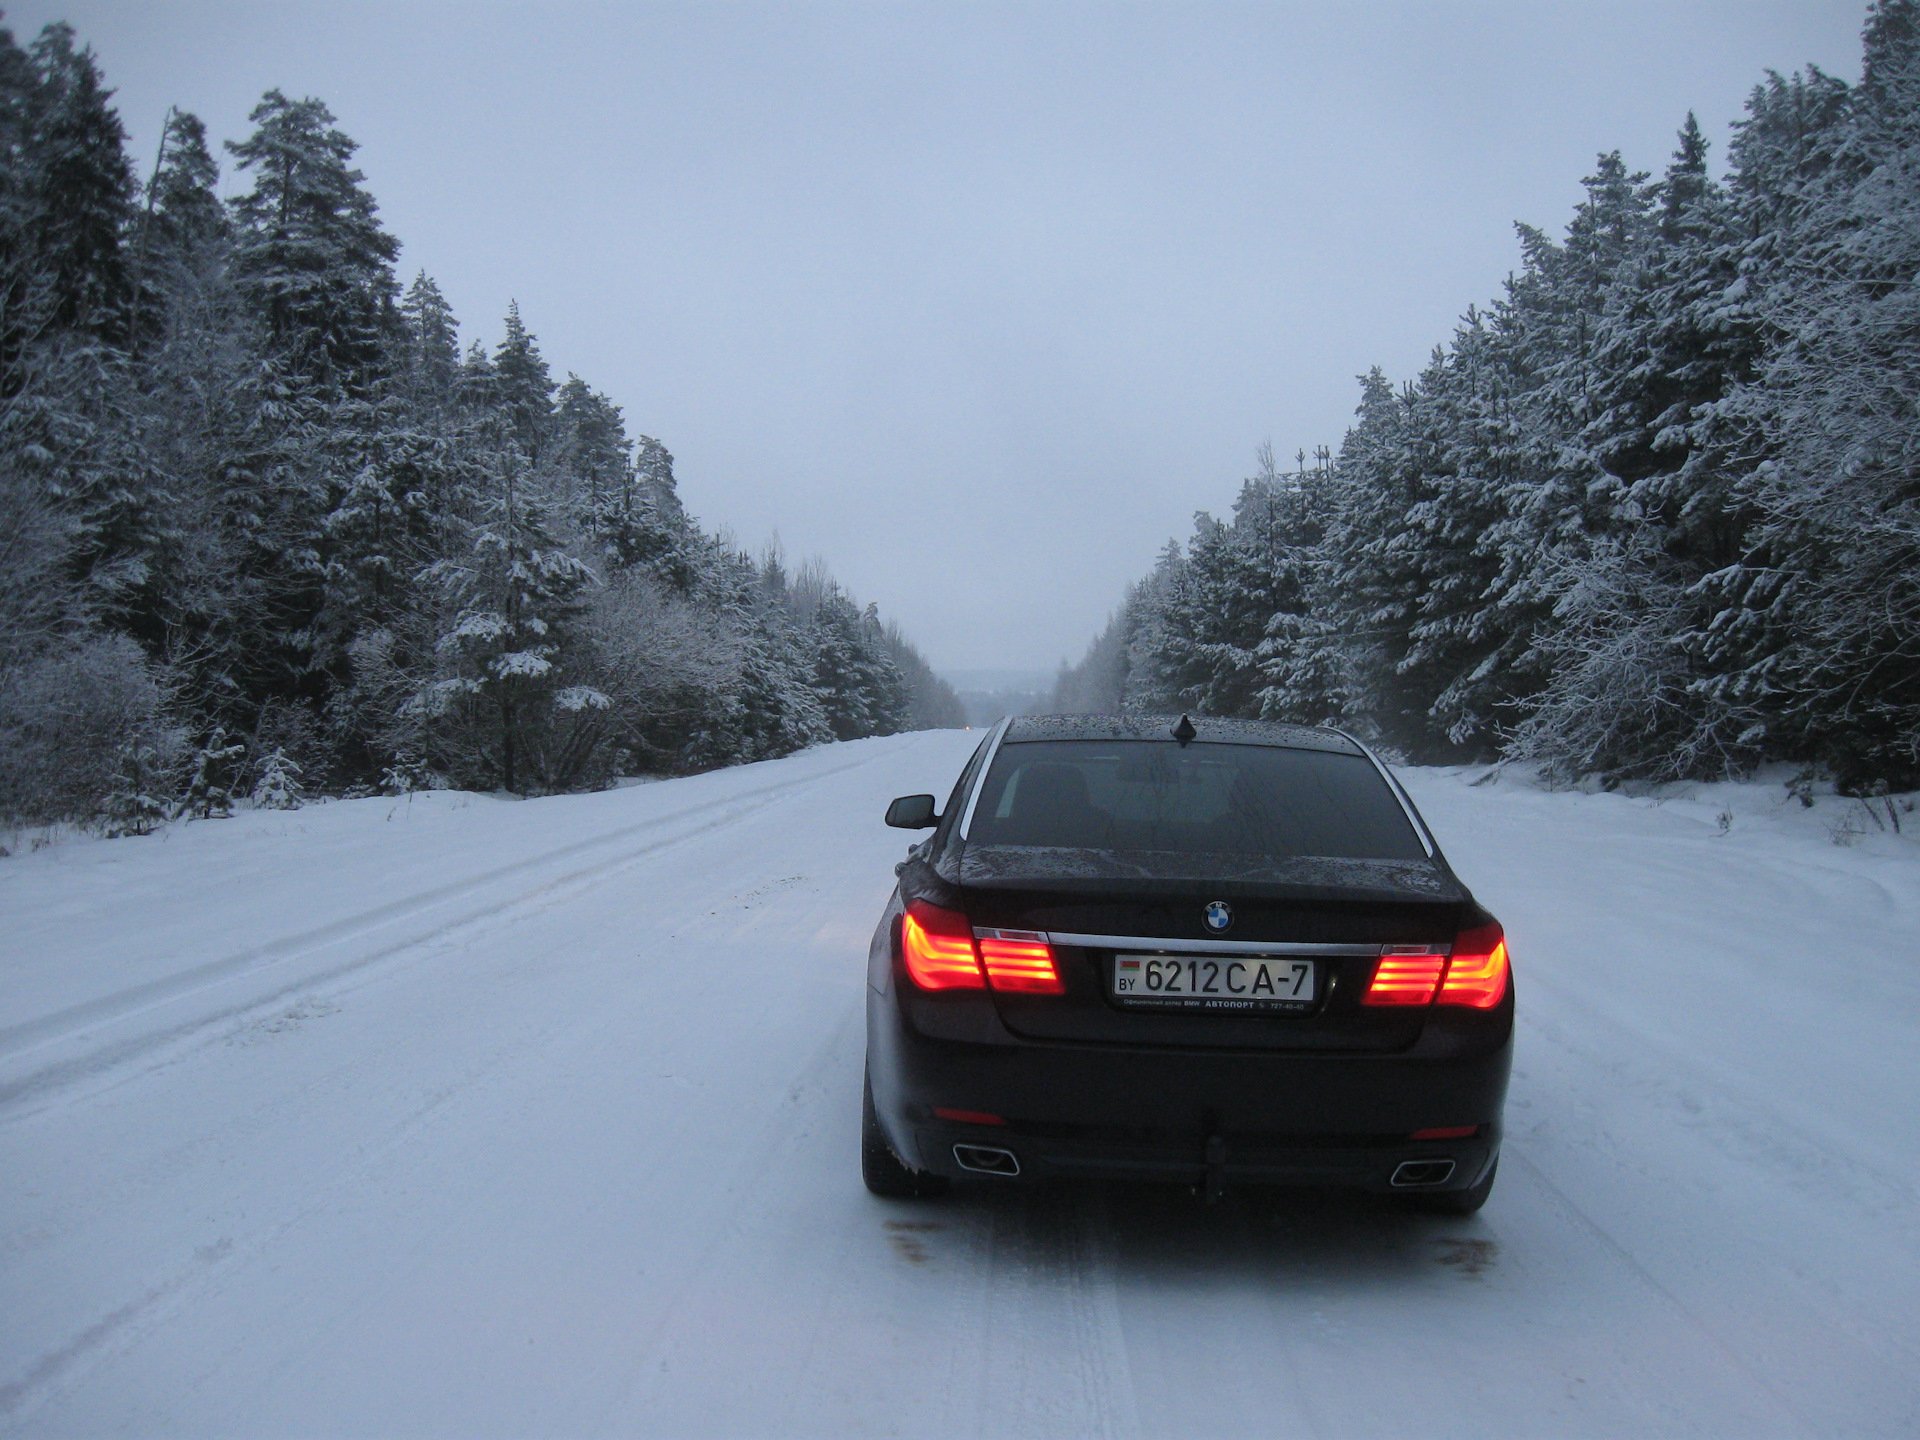 М5 зима. БМВ м5 зима ночь. БМВ м5 черная зимой. BMW e39 зимой. BMW 750i зима.